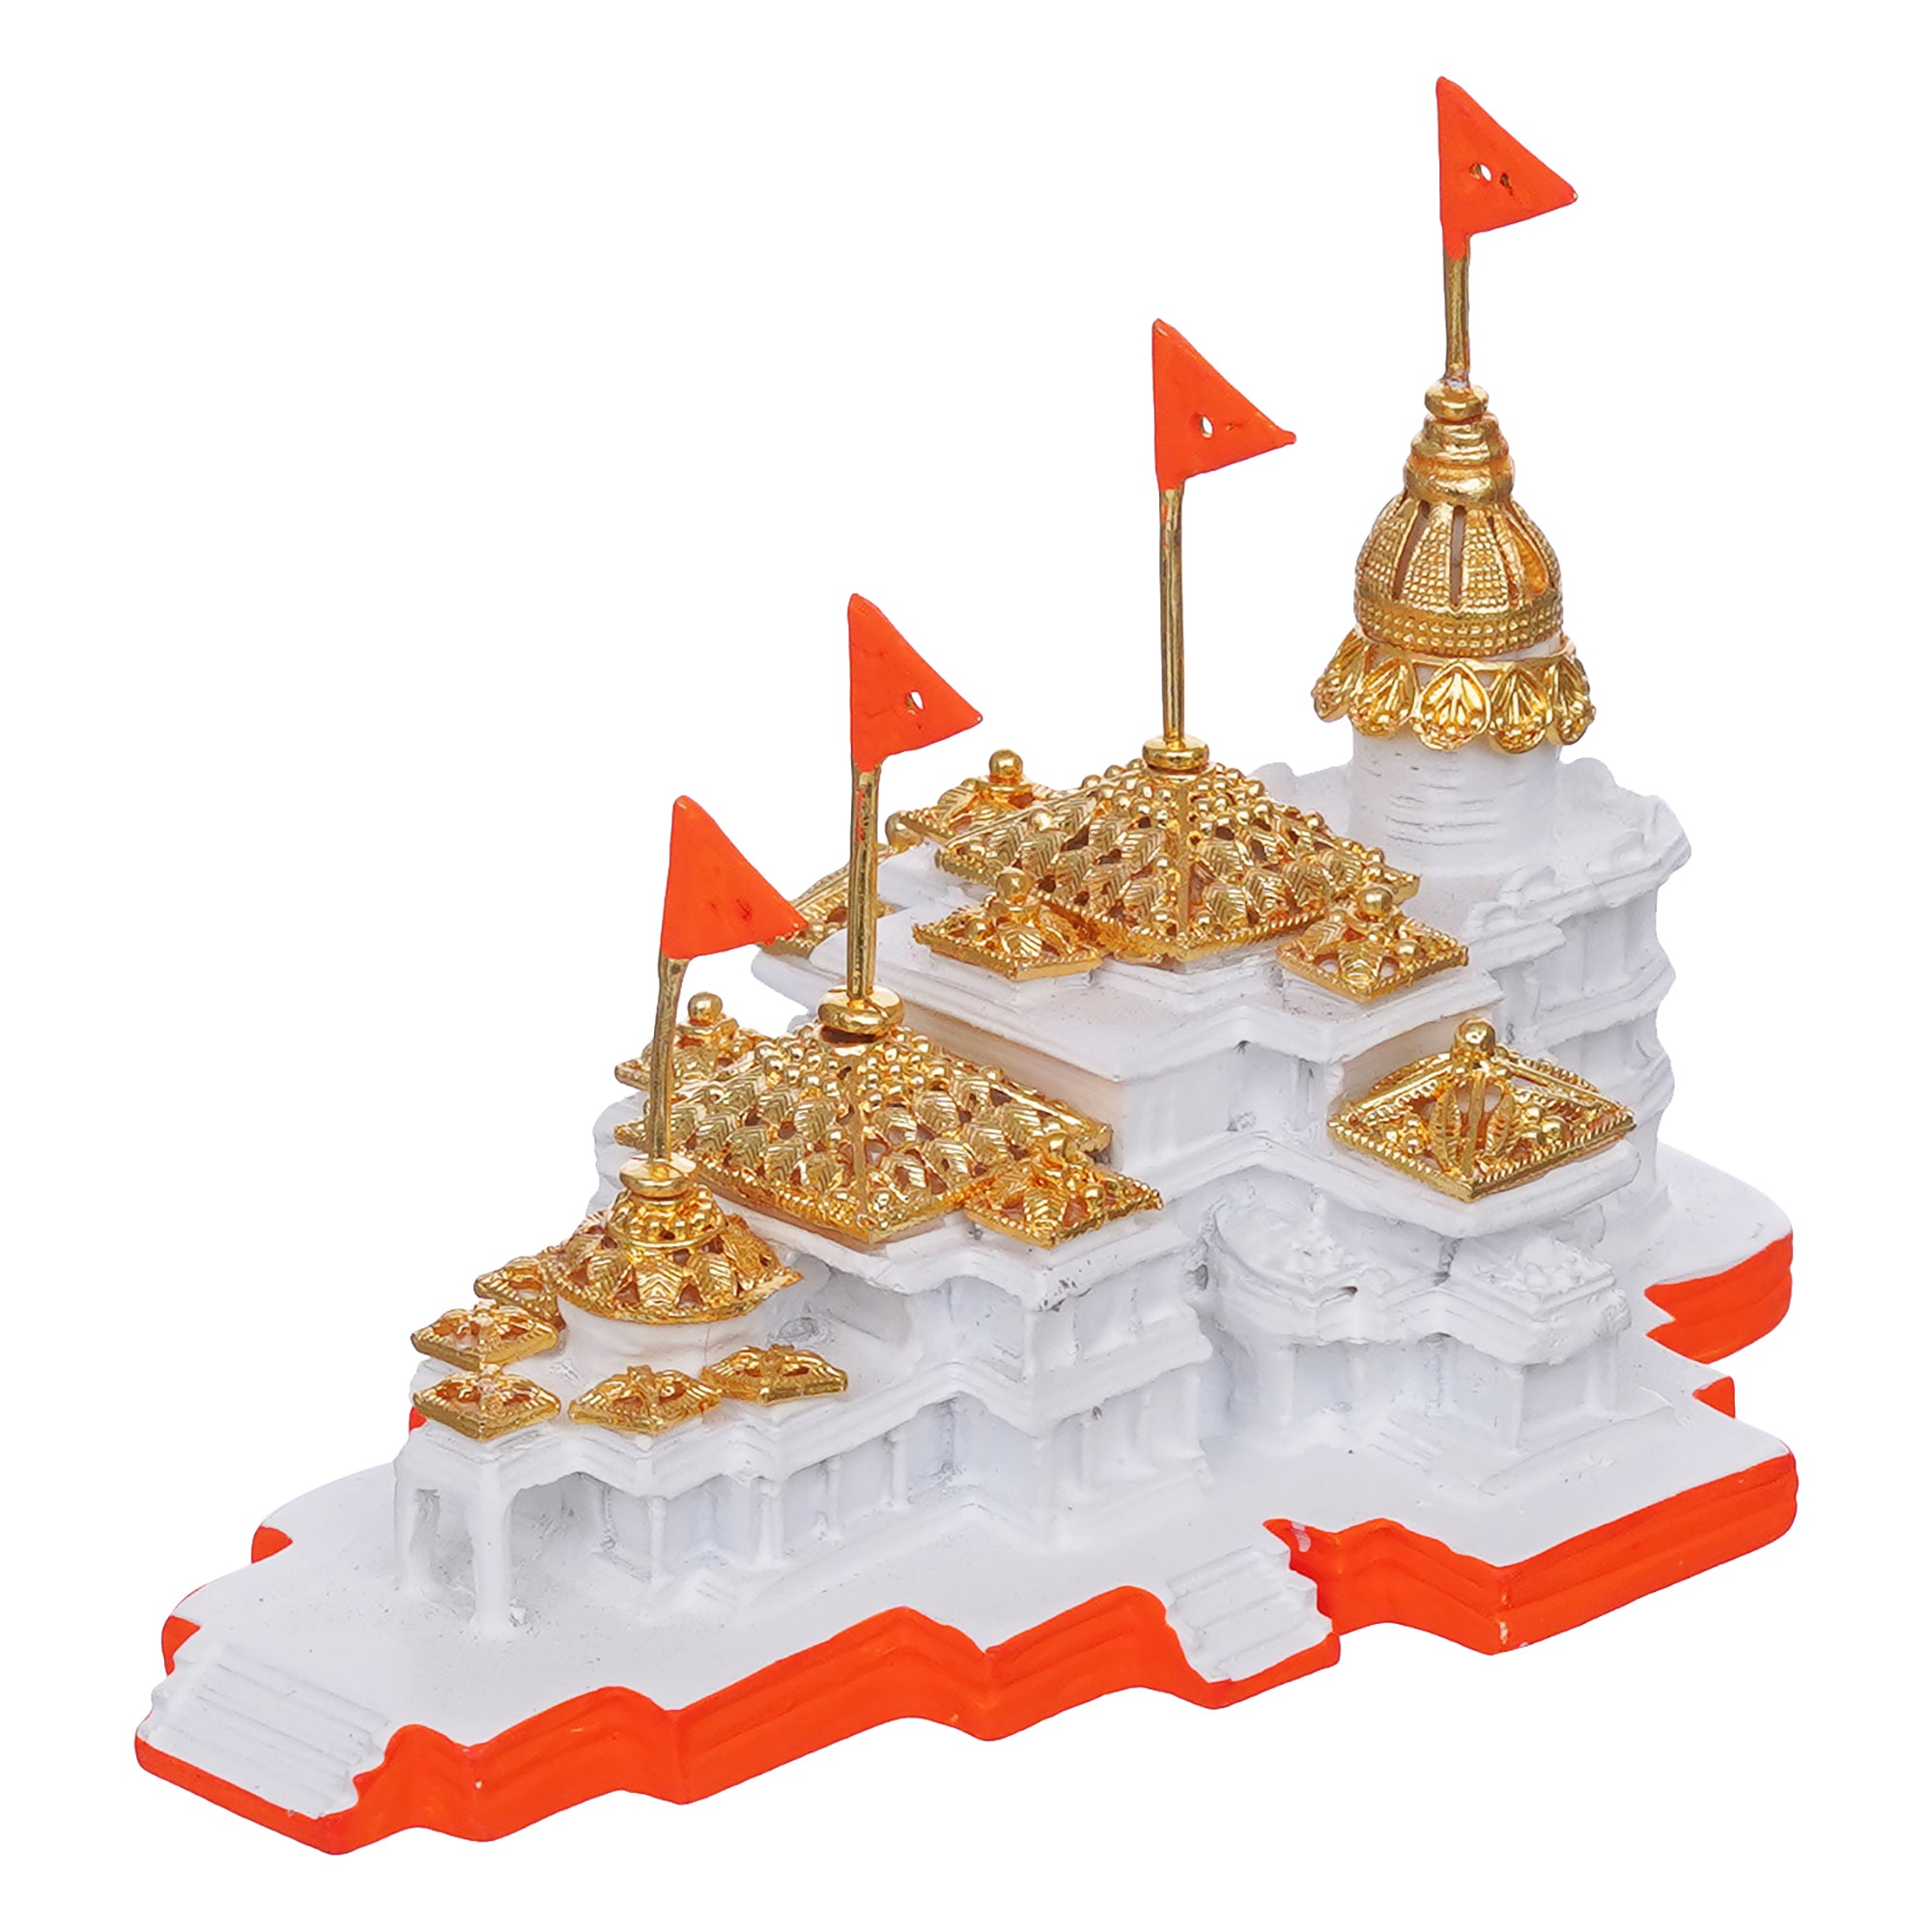 eCraftIndia Shri Ram Mandir Ayodhya Model Authentic Design - Perfect for Home Temple, Decor, and Spiritual Gifting (White, Gold, Orange) 6